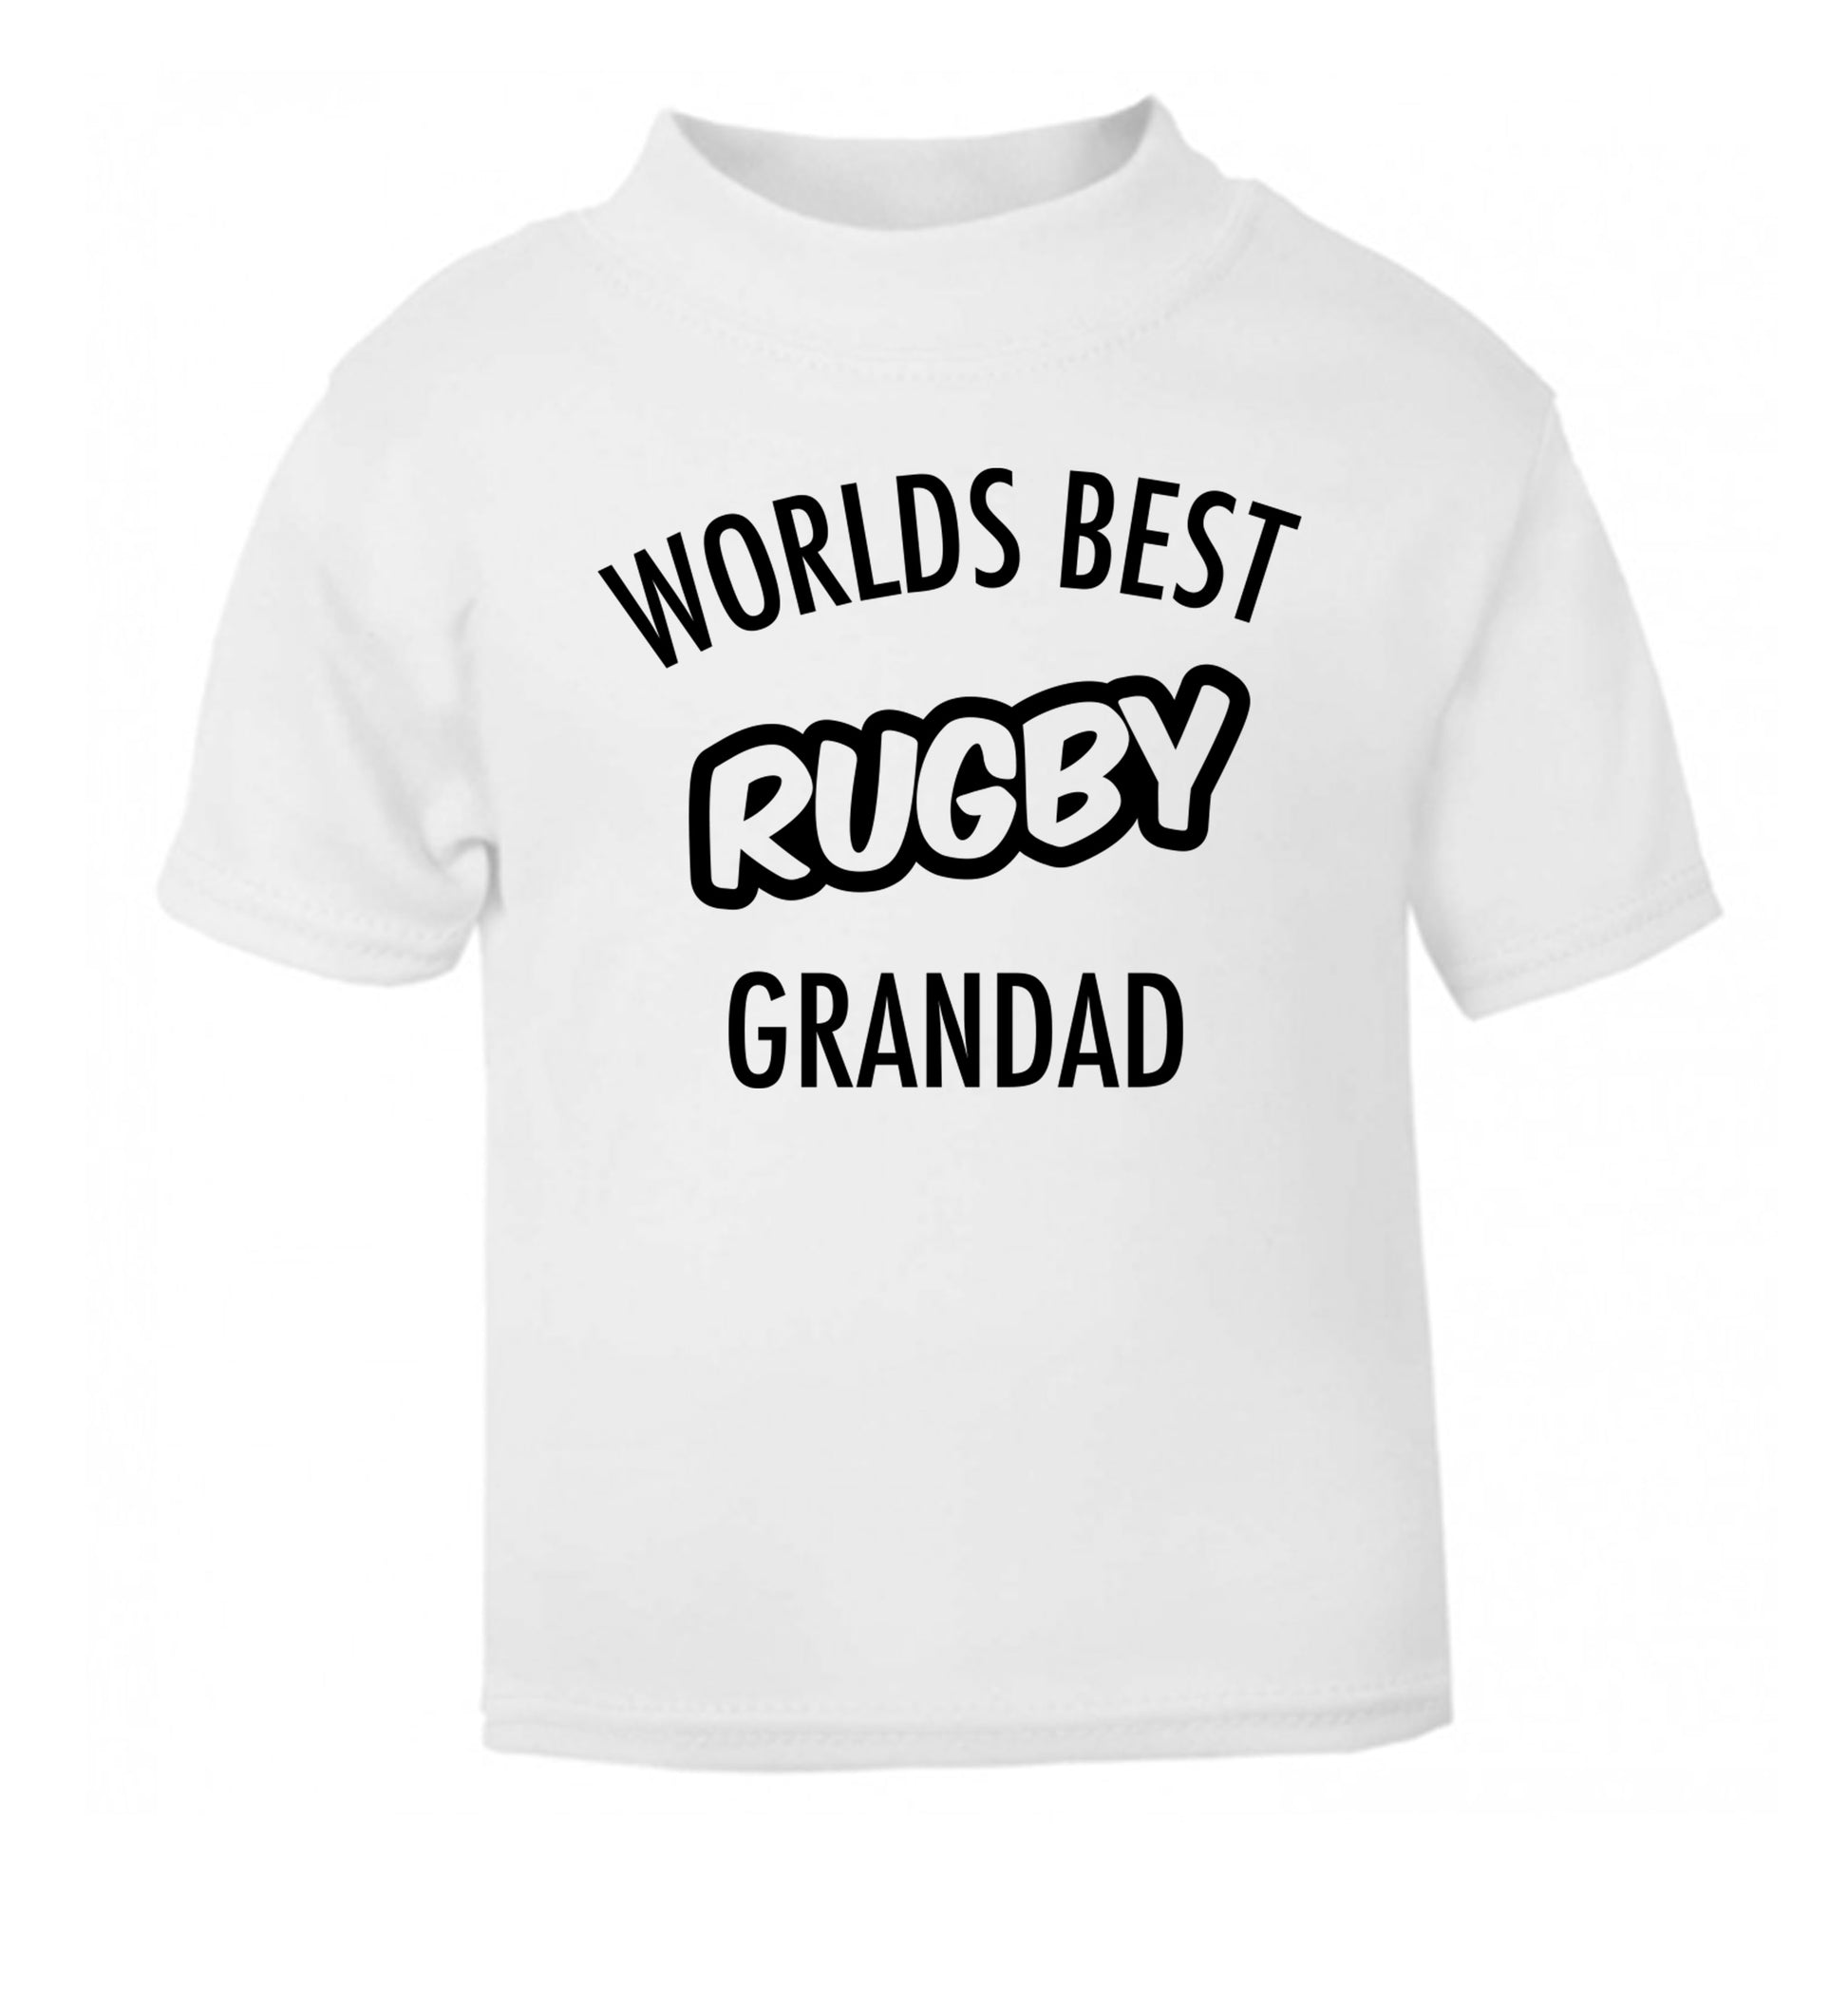 Worlds best rugby grandad white Baby Toddler Tshirt 2 Years